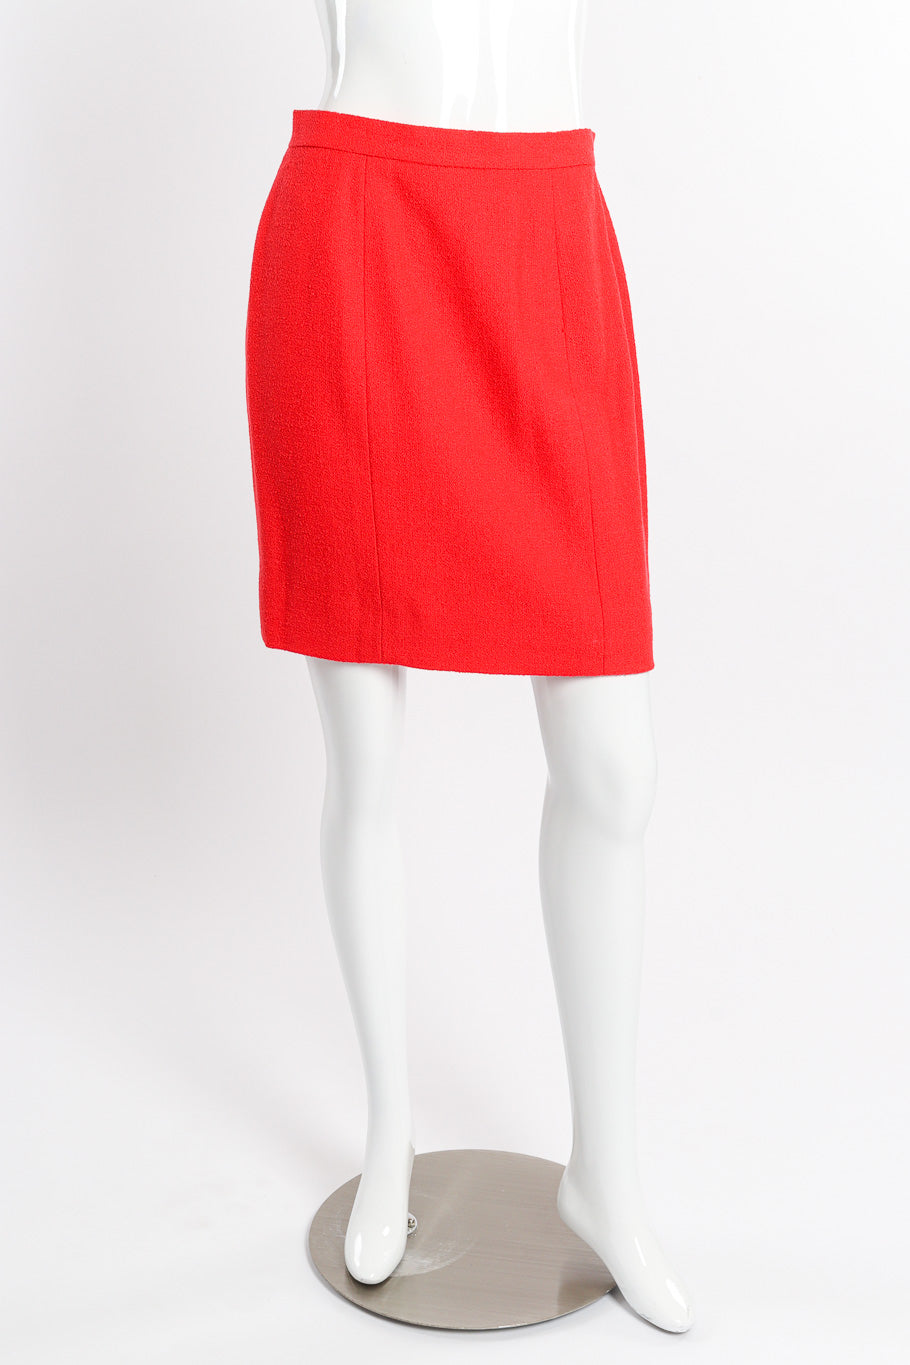 1996 F/W Bouclé Knit Longline Blazer & Skirt Set by Chanel on mannequin skirt only @recessla